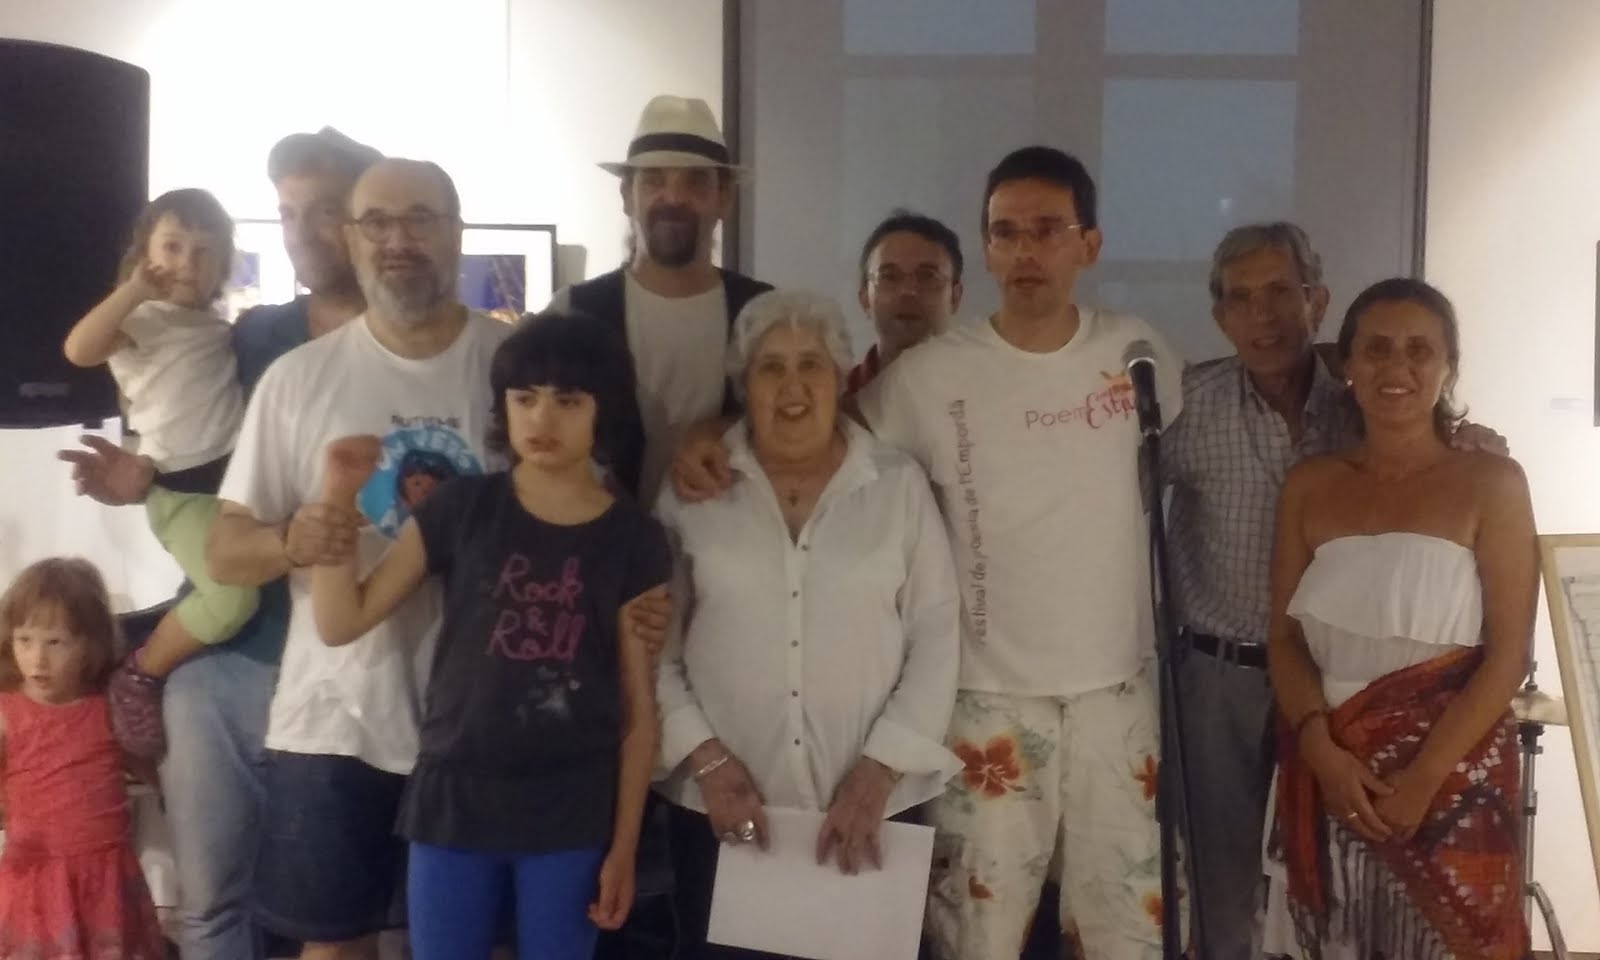 Poemestiu 2015 Eco-Museu la Farinera Castelló d'Empúries